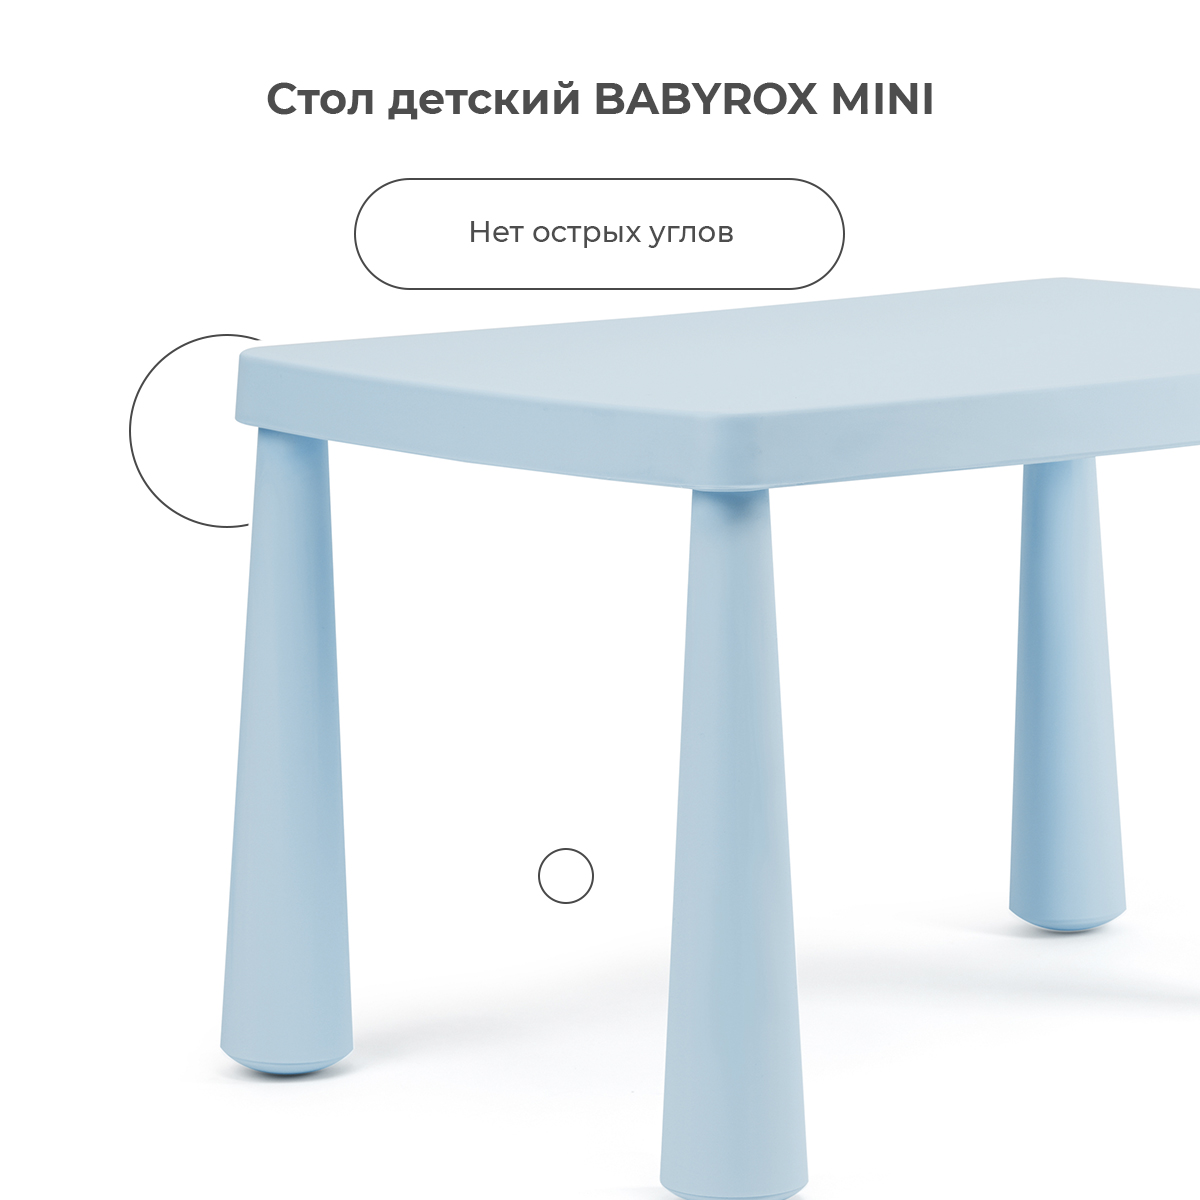 Стол детский BabyRox MINI - фото 5